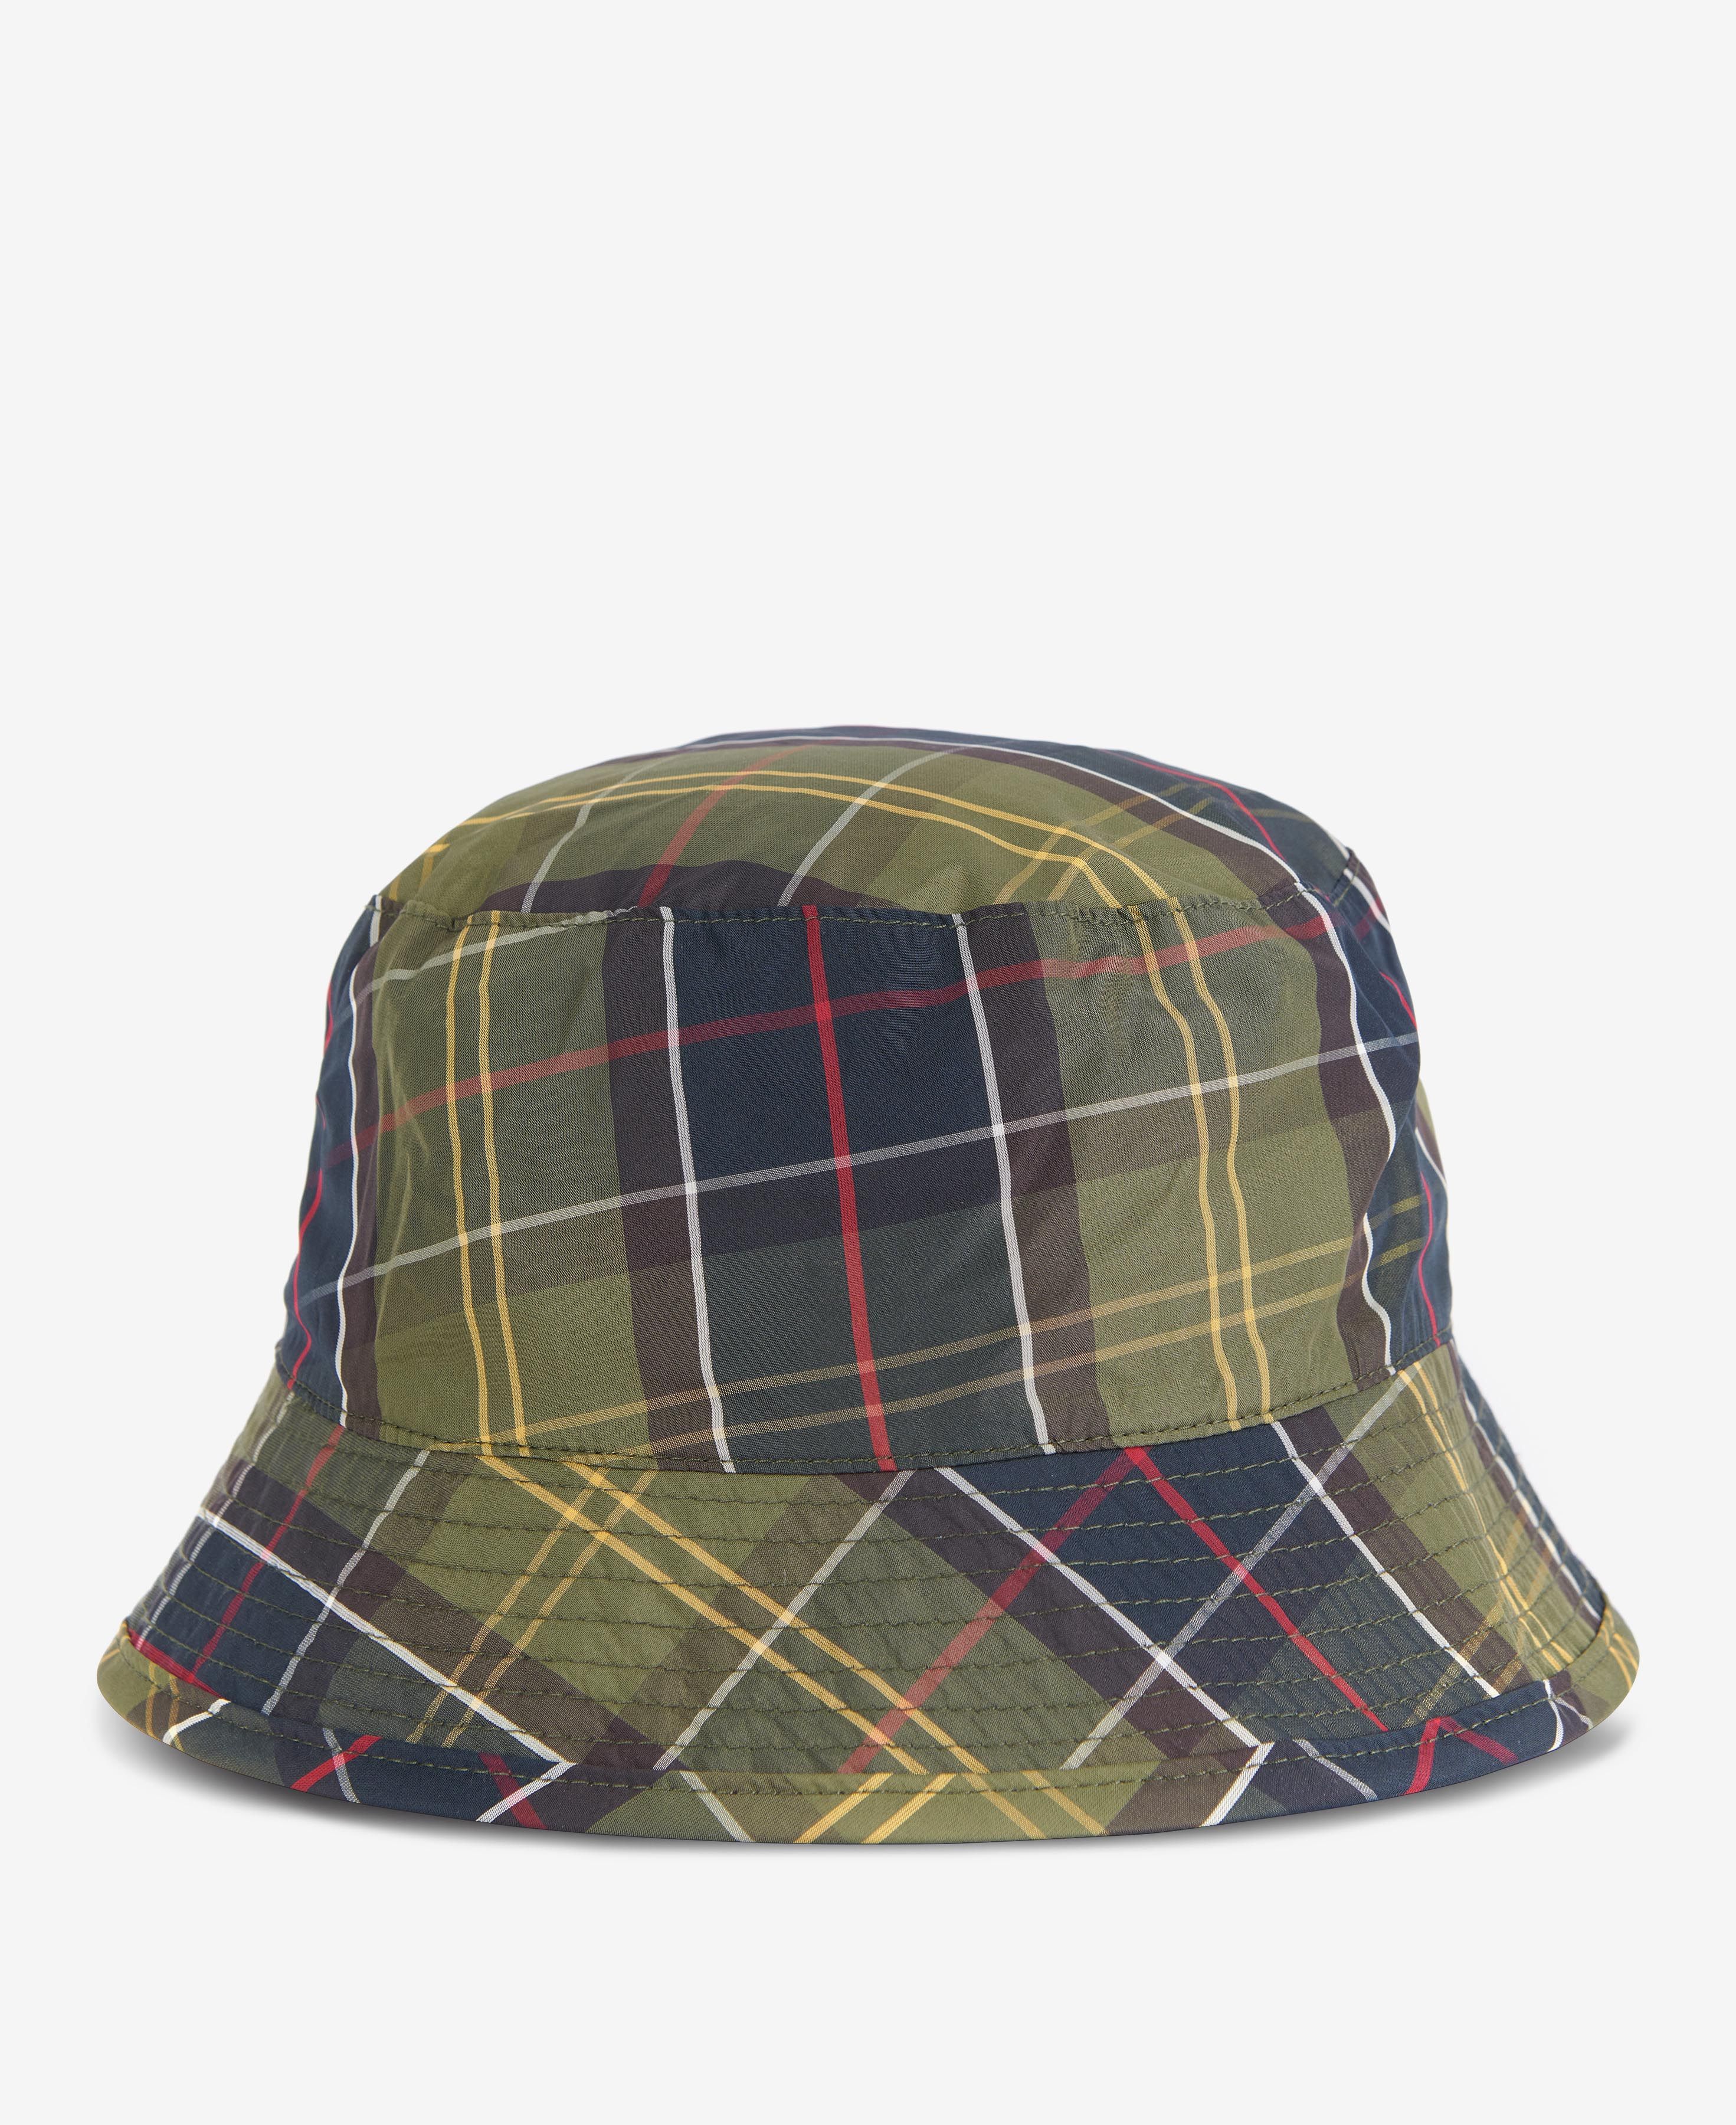 Barbour Packable Sports Hat